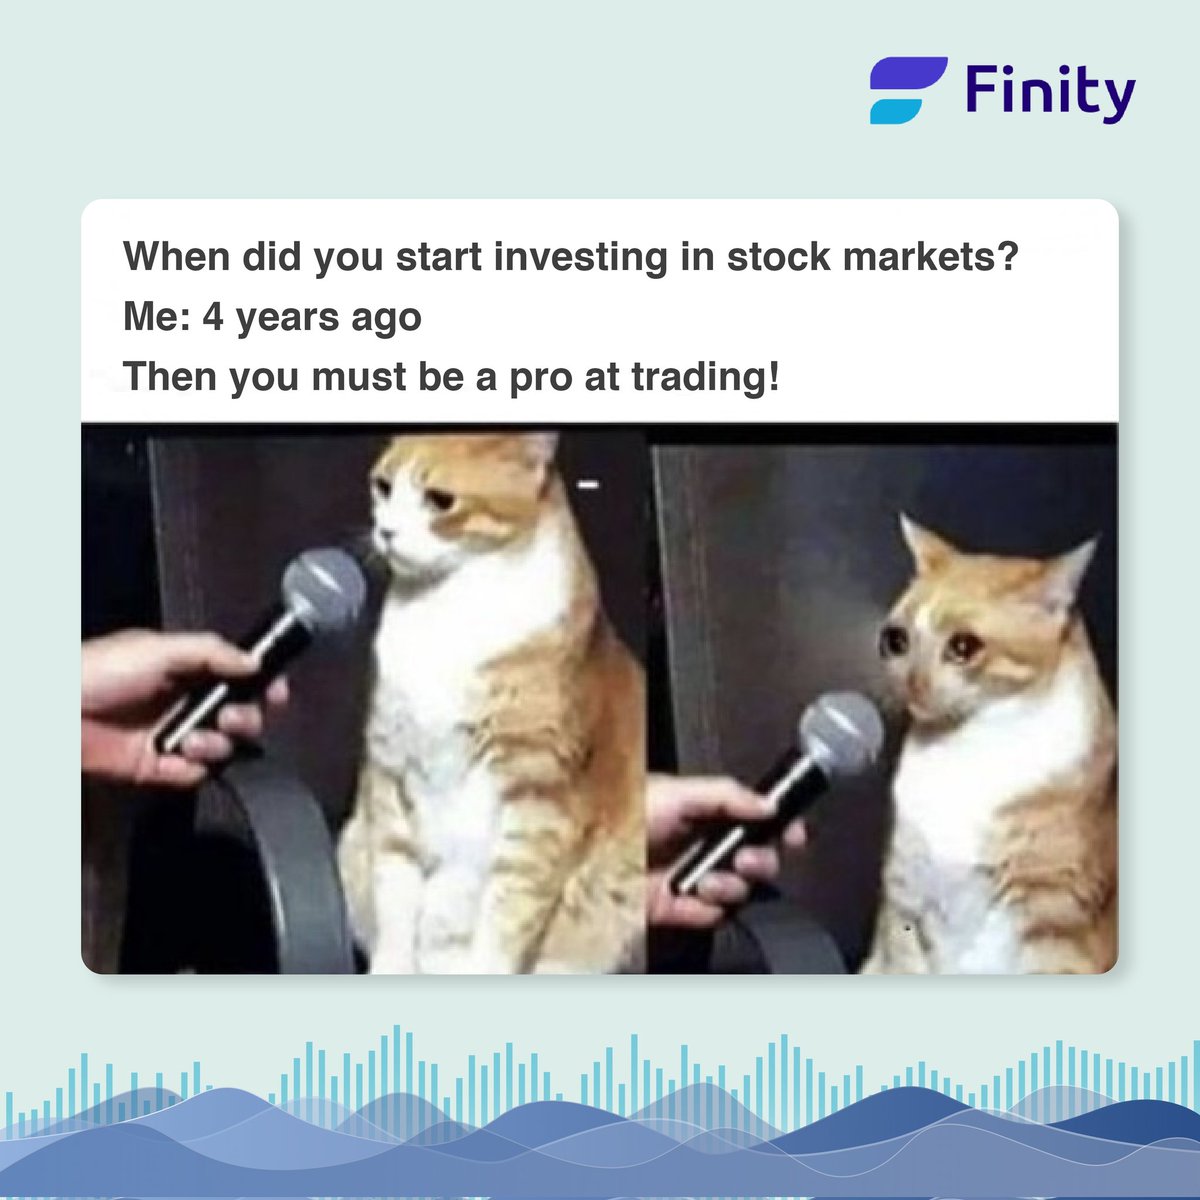 Trading experience se ghar nahi chalta! 🥲🥲
.
.
.
.
#finity #fintech #investingstrategy #stockmarketindia #stockmarketinvestor #traderlife #tradingexperience